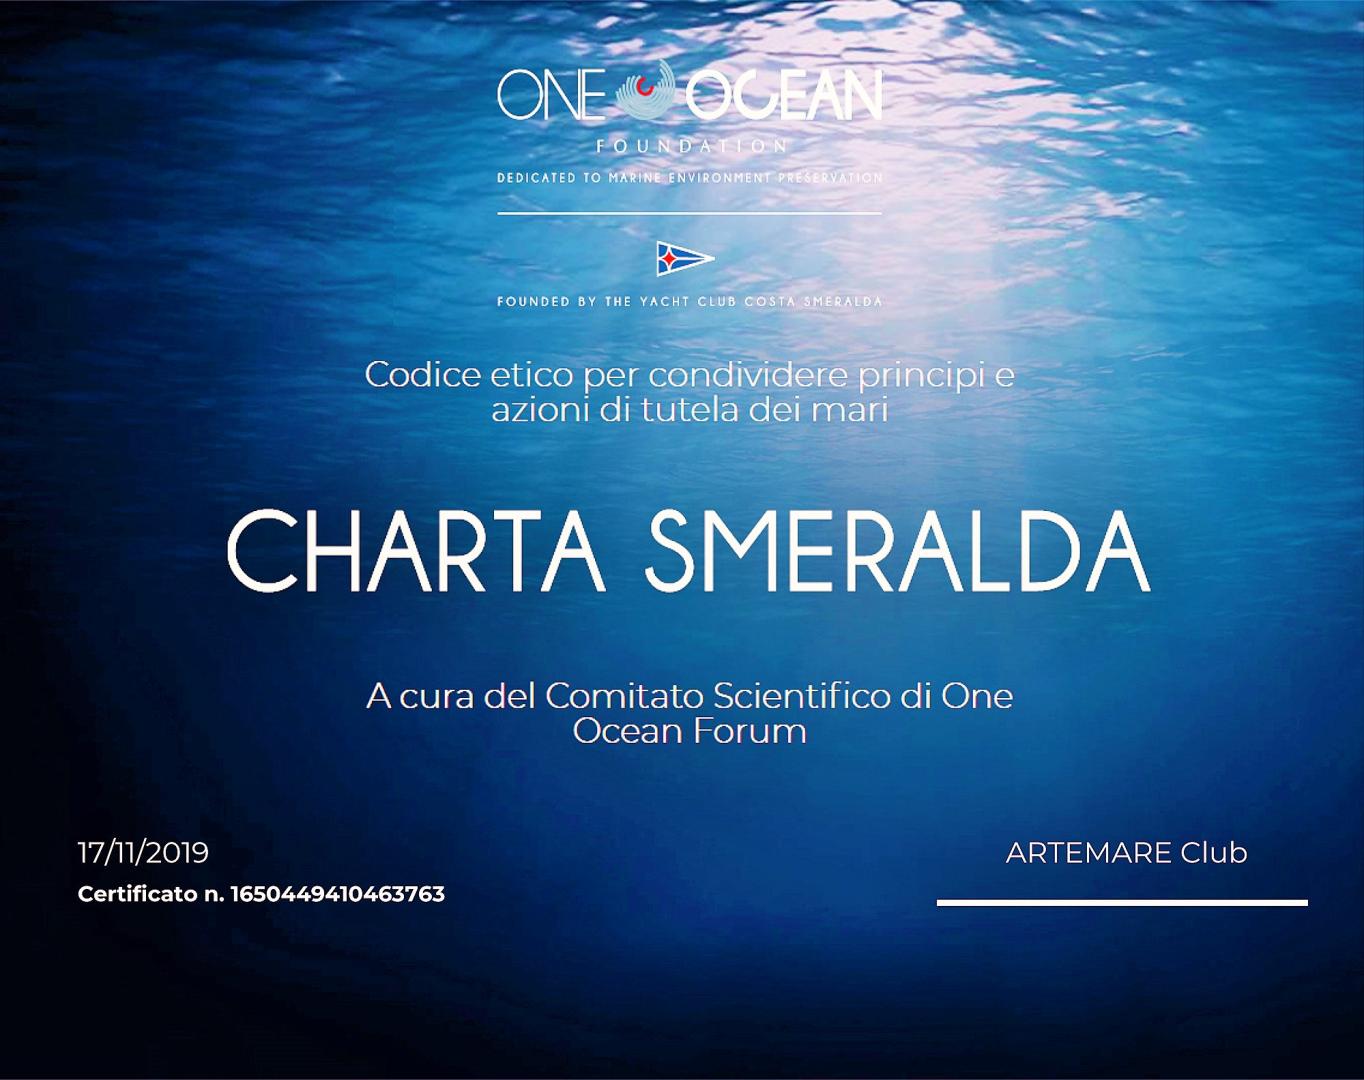 Artemare Club firma la Charta Smeralda di One Ocean Foundation